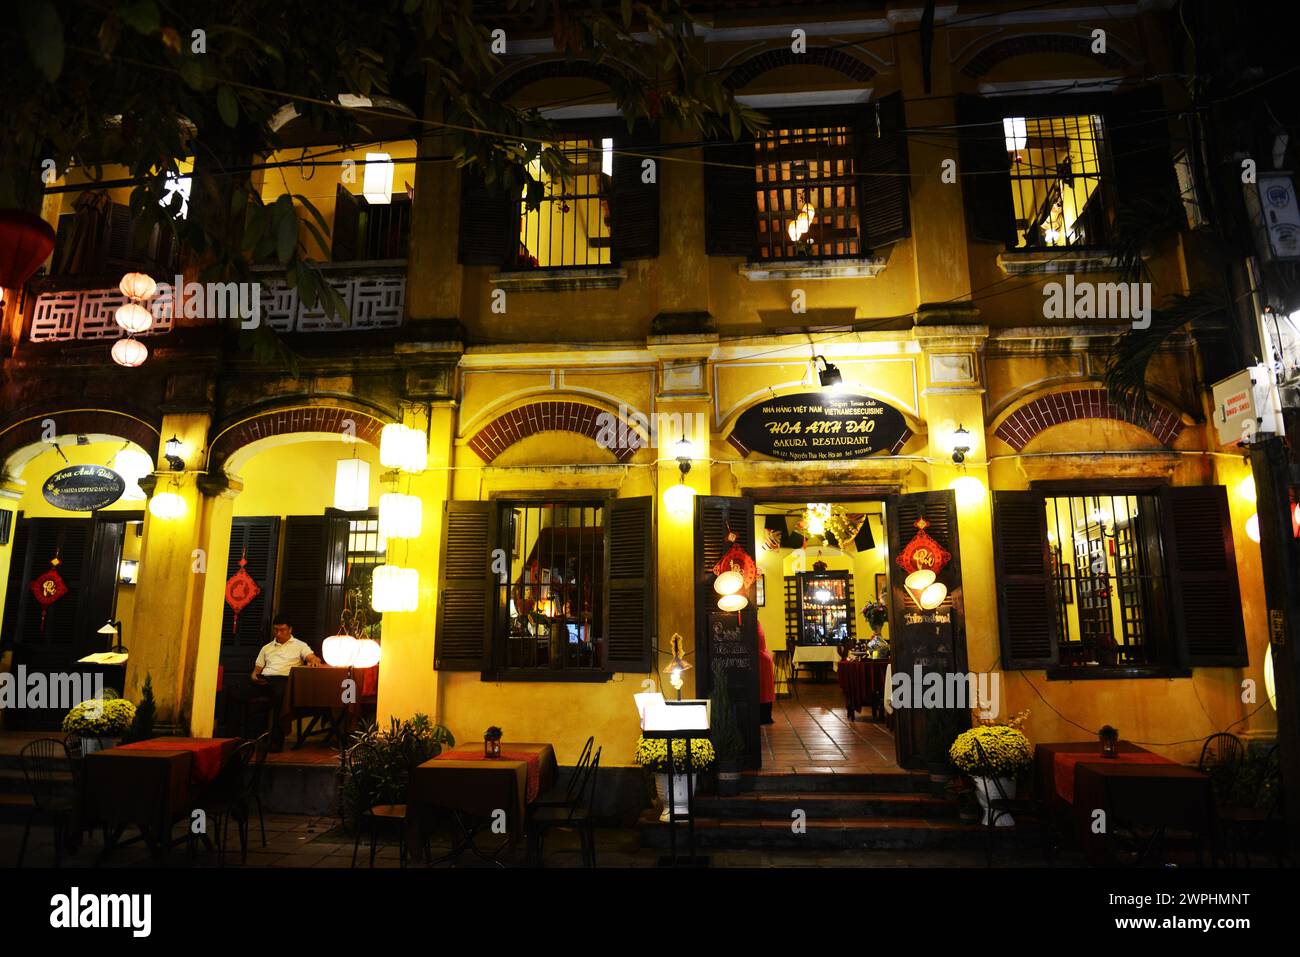 Sakura restaurant at night. Old city of Hoi An, Vietnam. Stock Photo